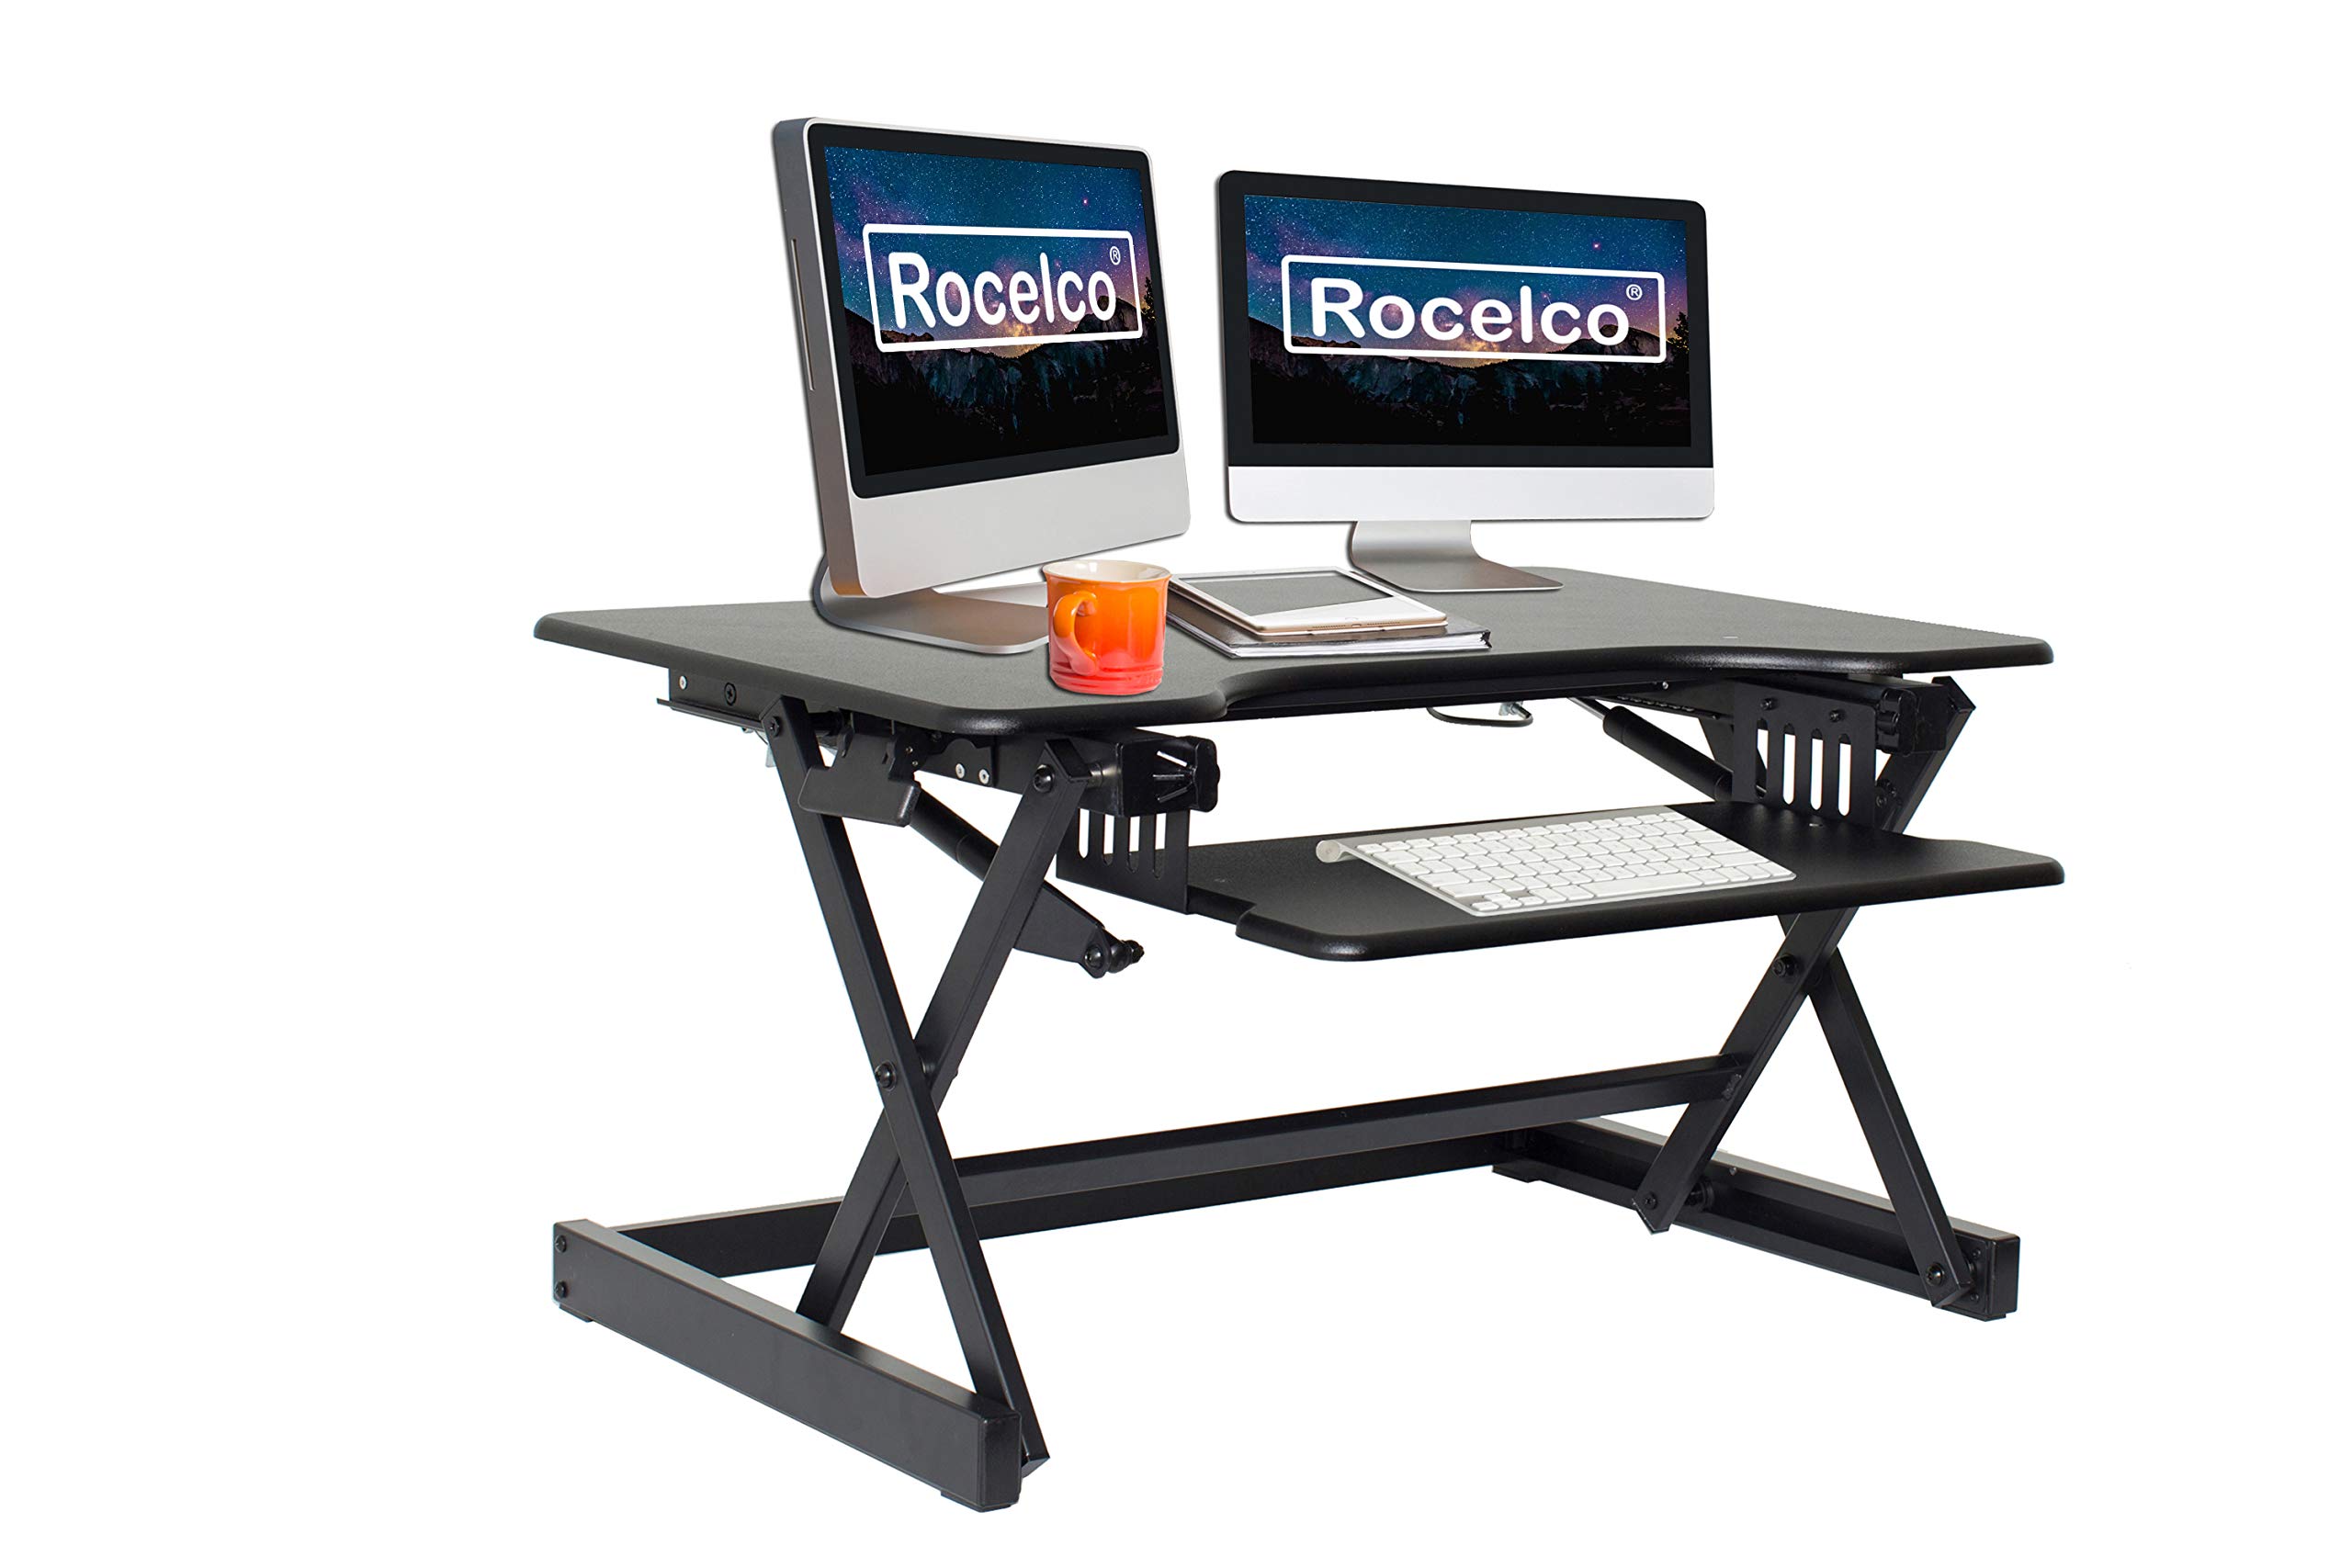 Rocelco 높이 조절 스탠딩 데스크 컨버터